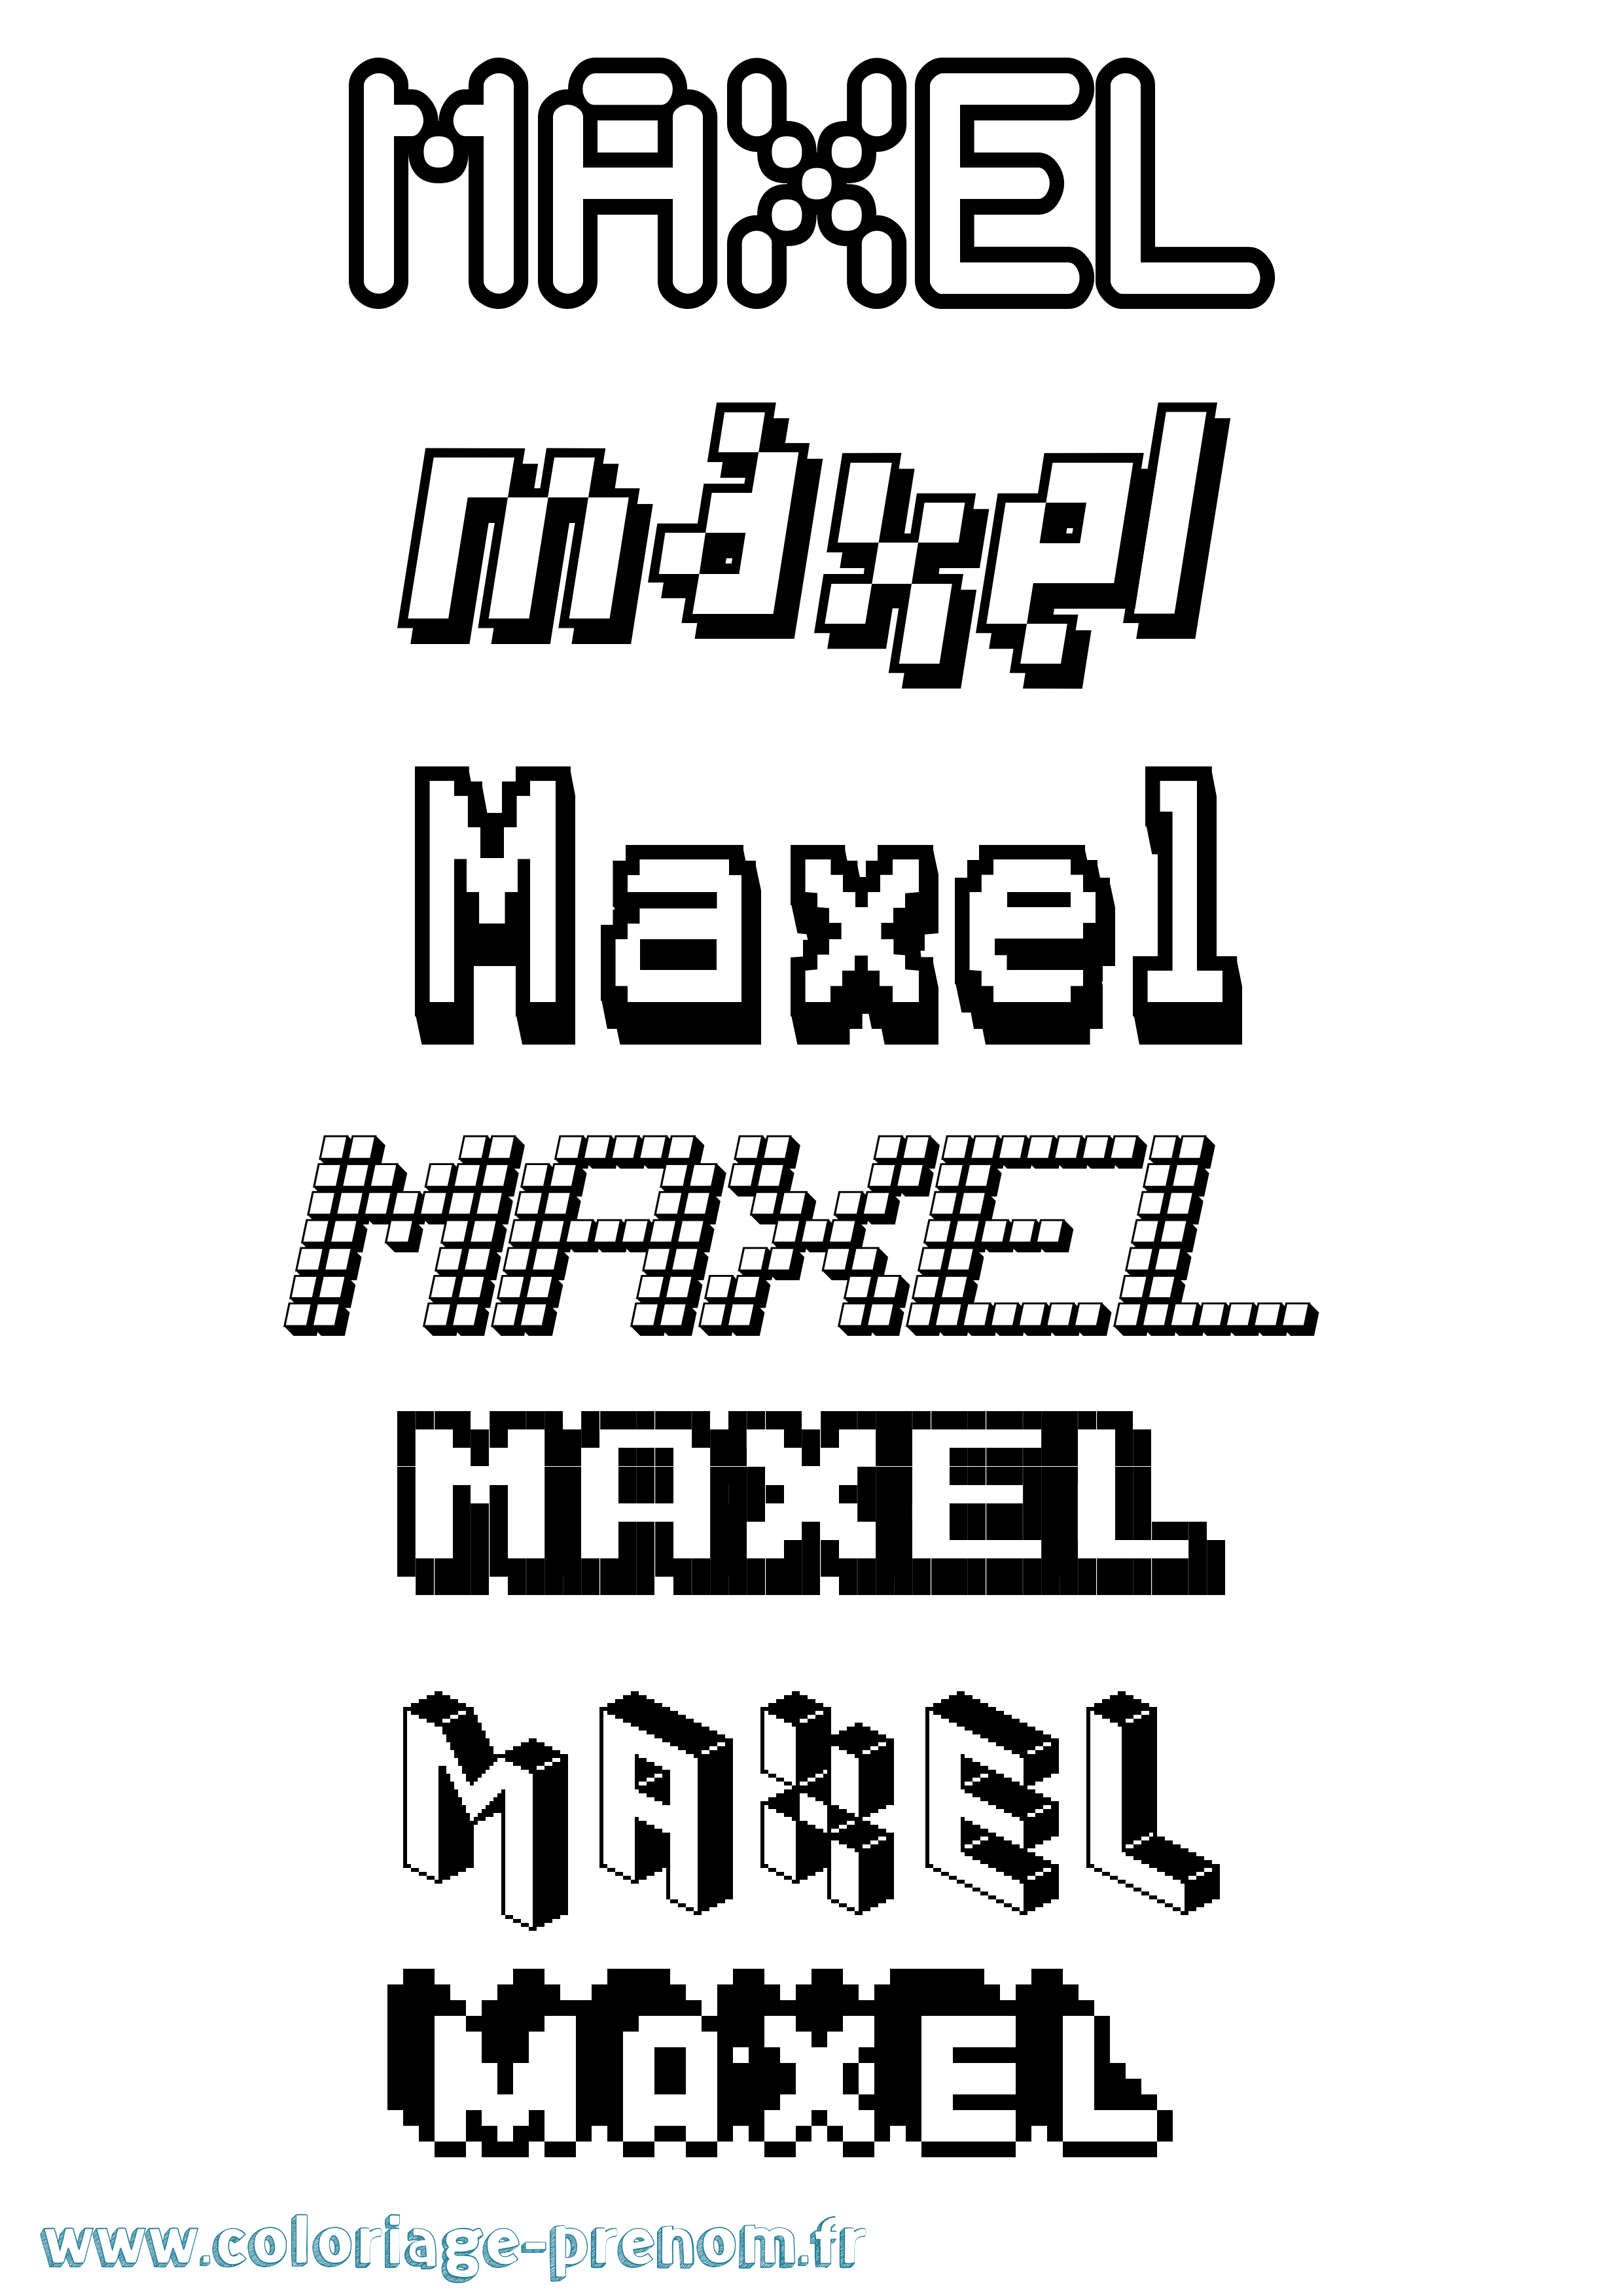 Coloriage prénom Maxel Pixel